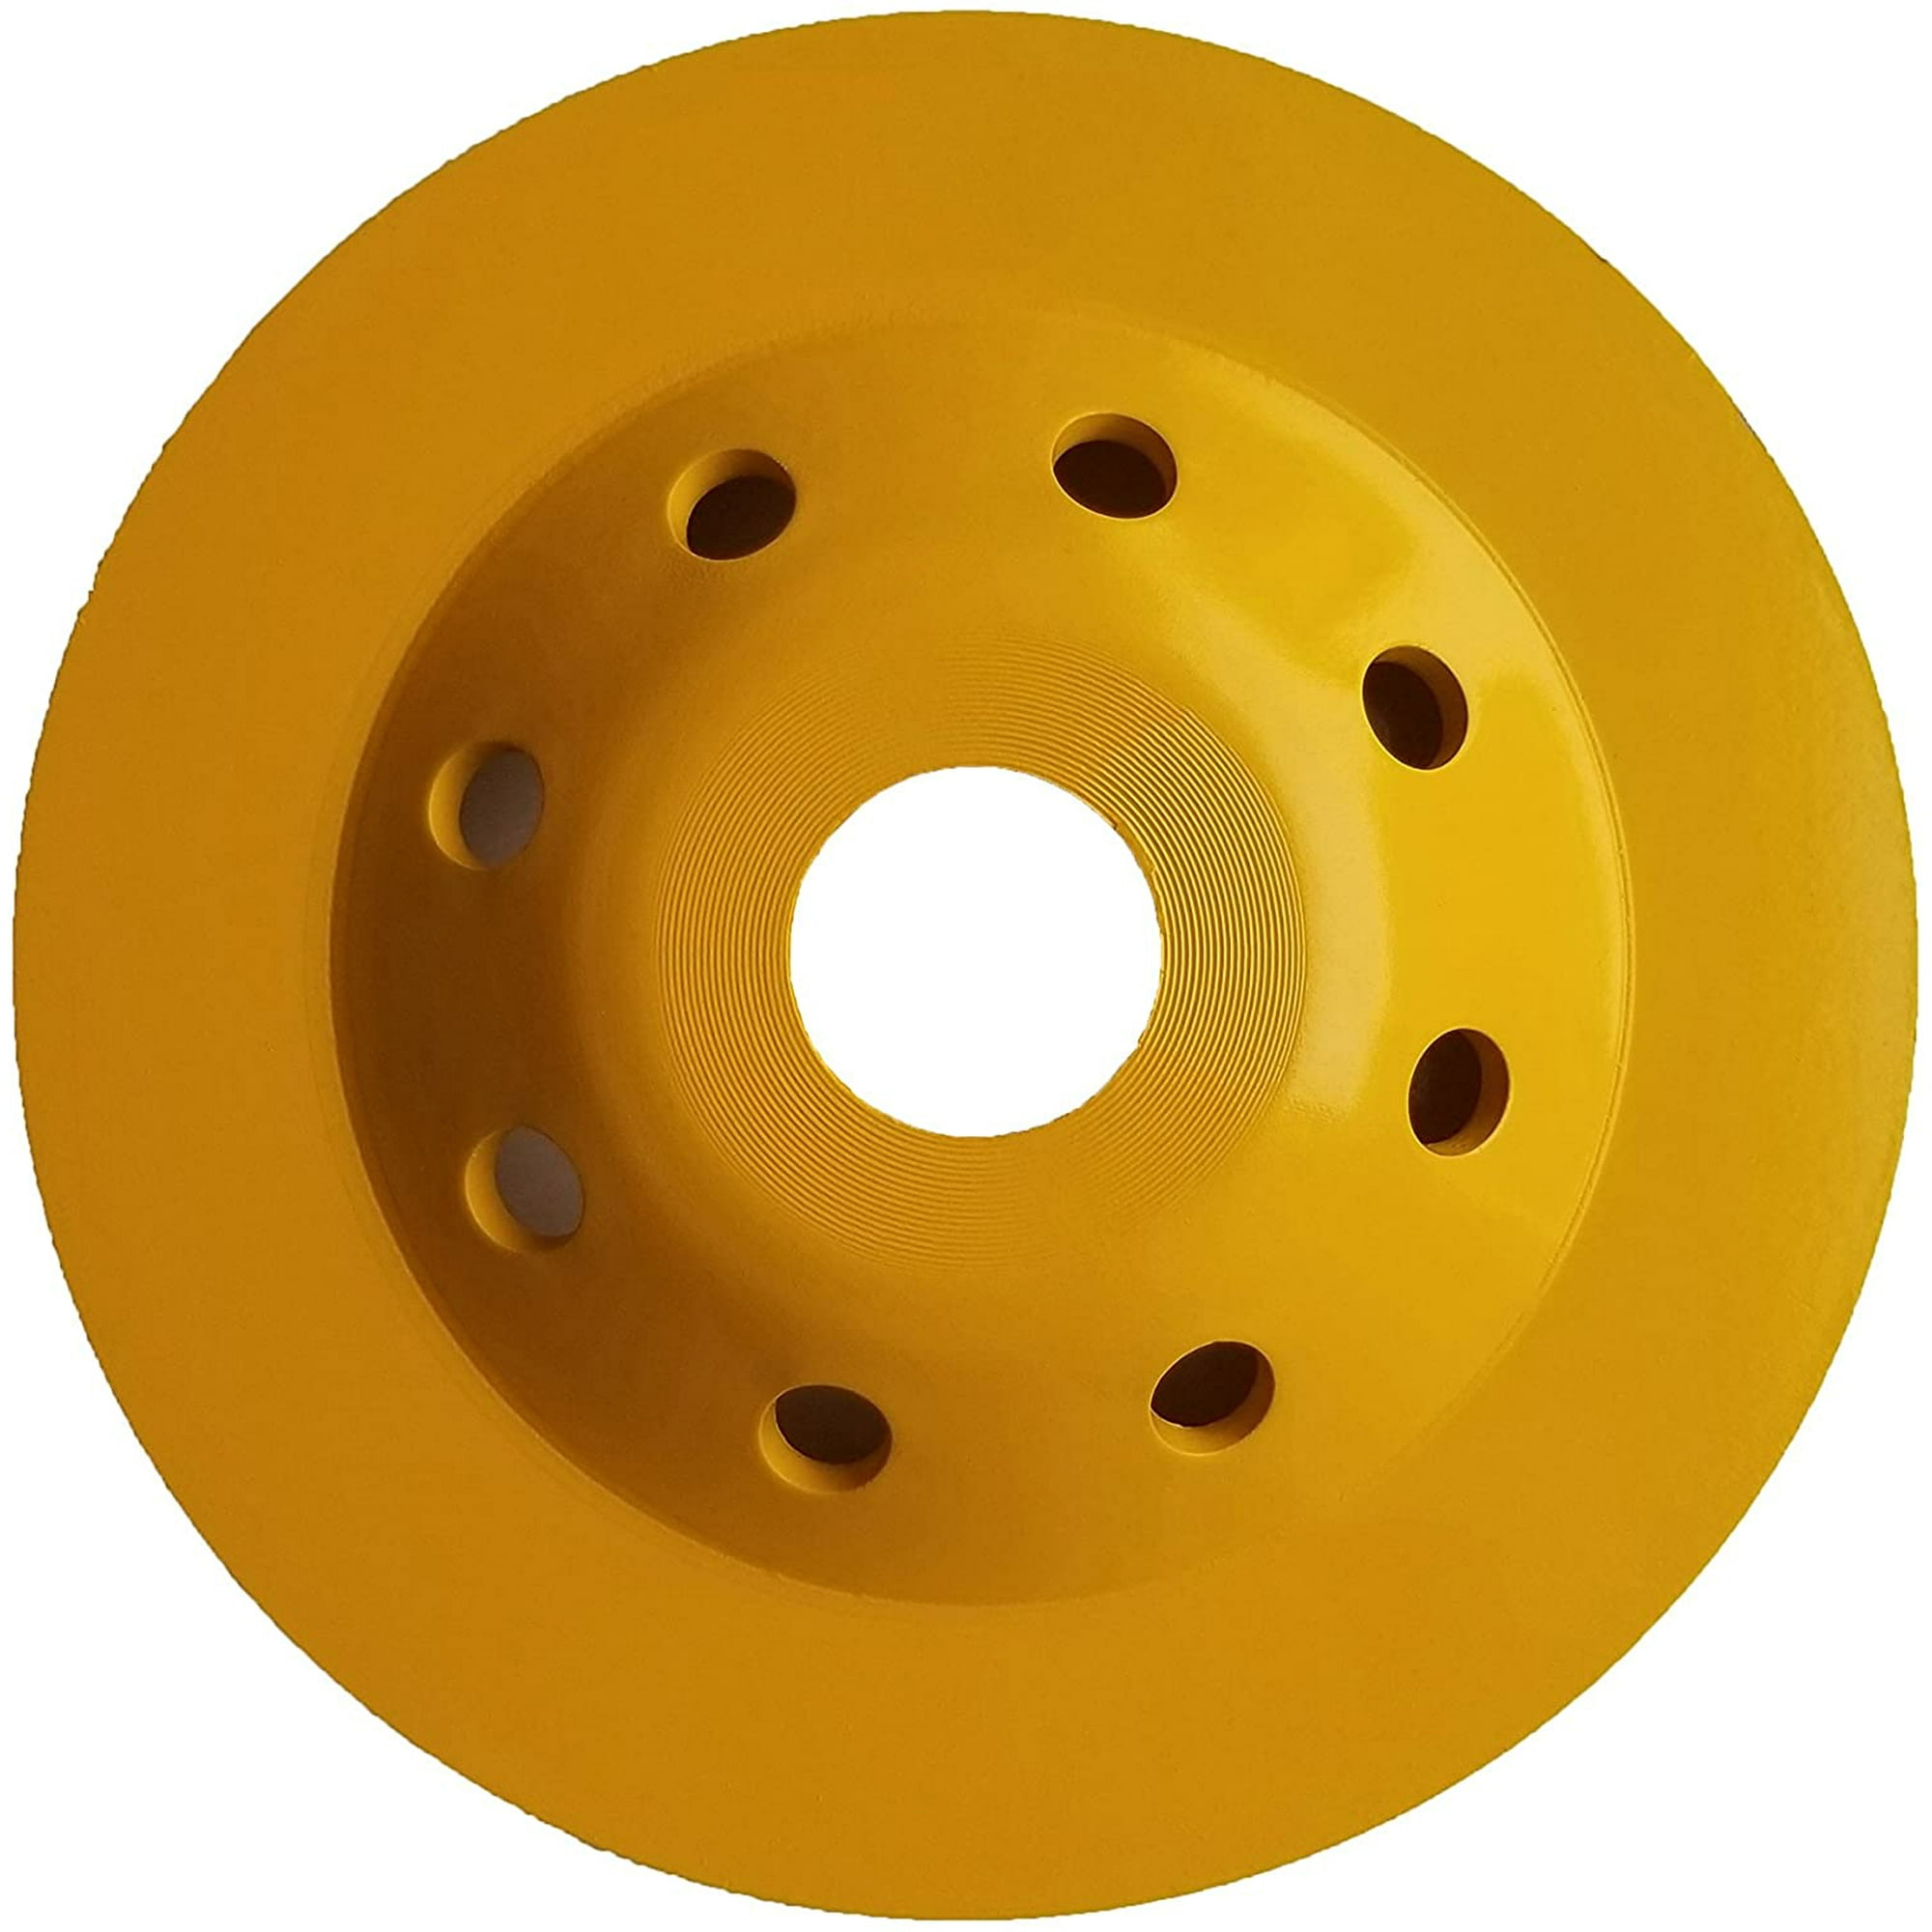 Disco Desbaste Hormigon Disco de tallado de madera for pulir diamantes,  disco de rueda, forma de